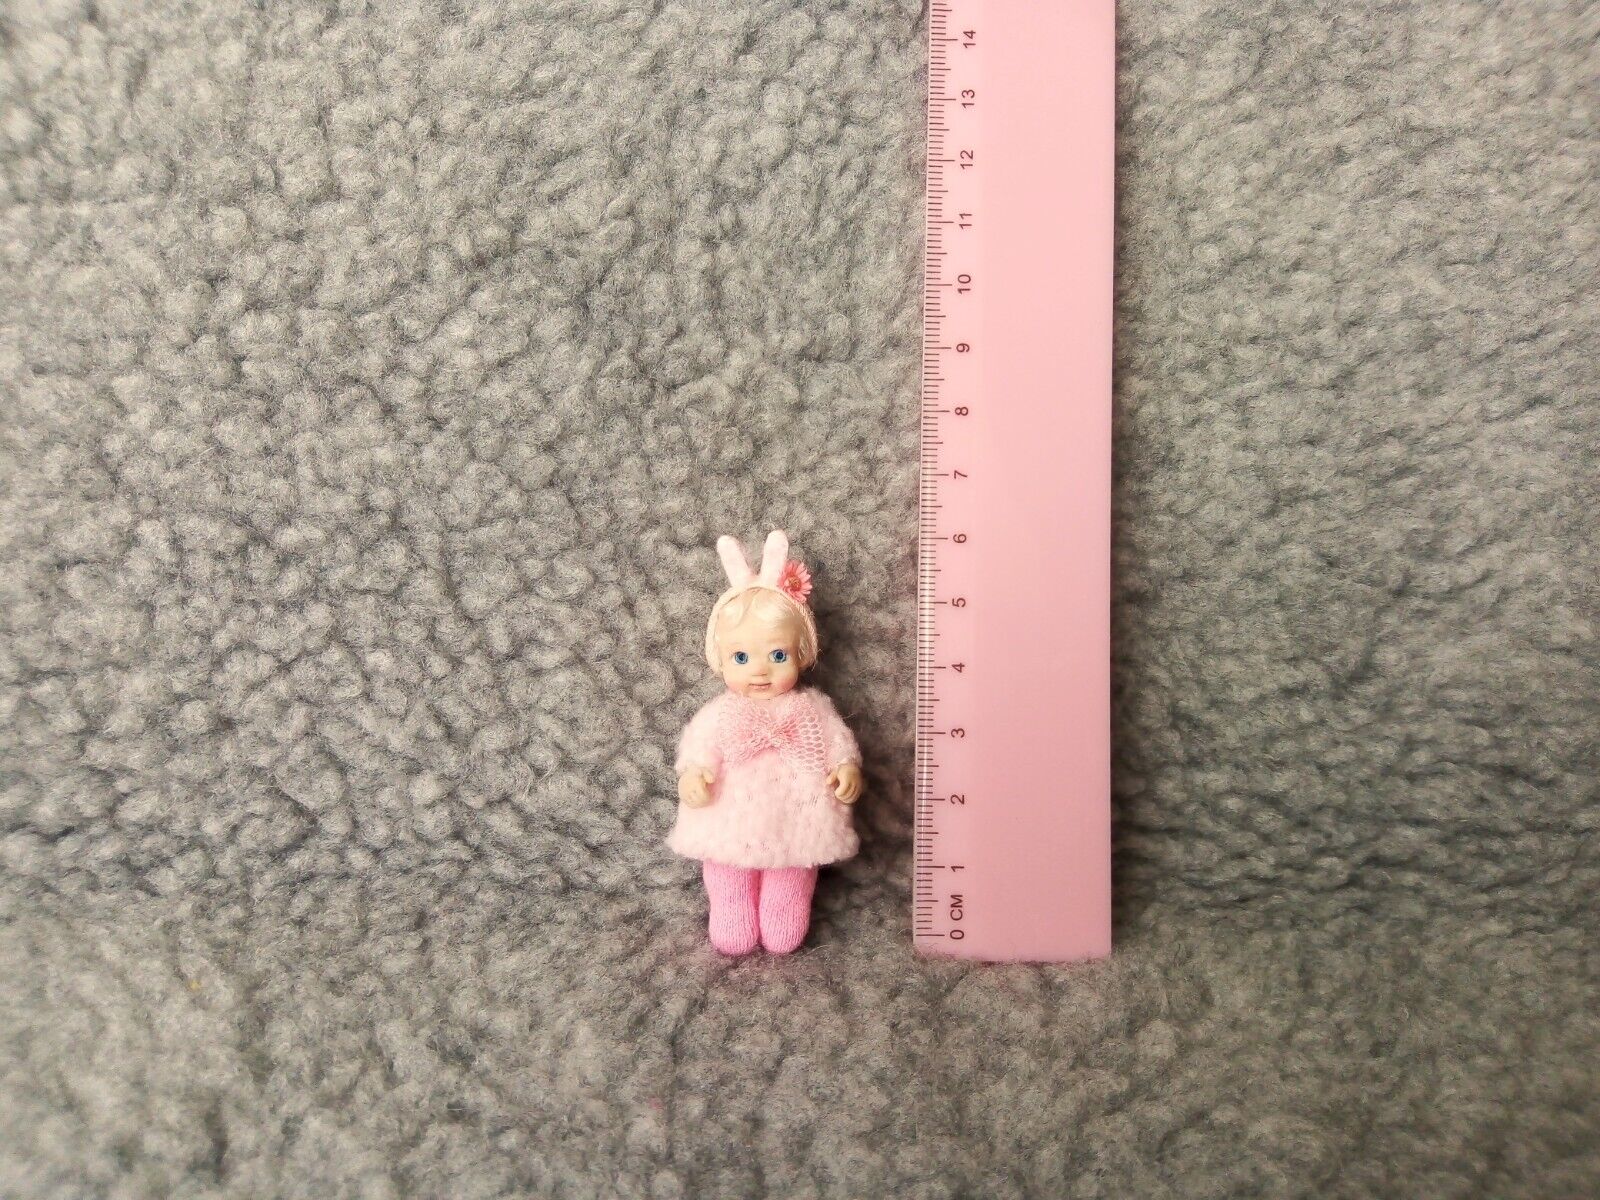 Miniature Dollhouse handmade tiny baby girl doll 1/12th scale. Mini OOAK Art